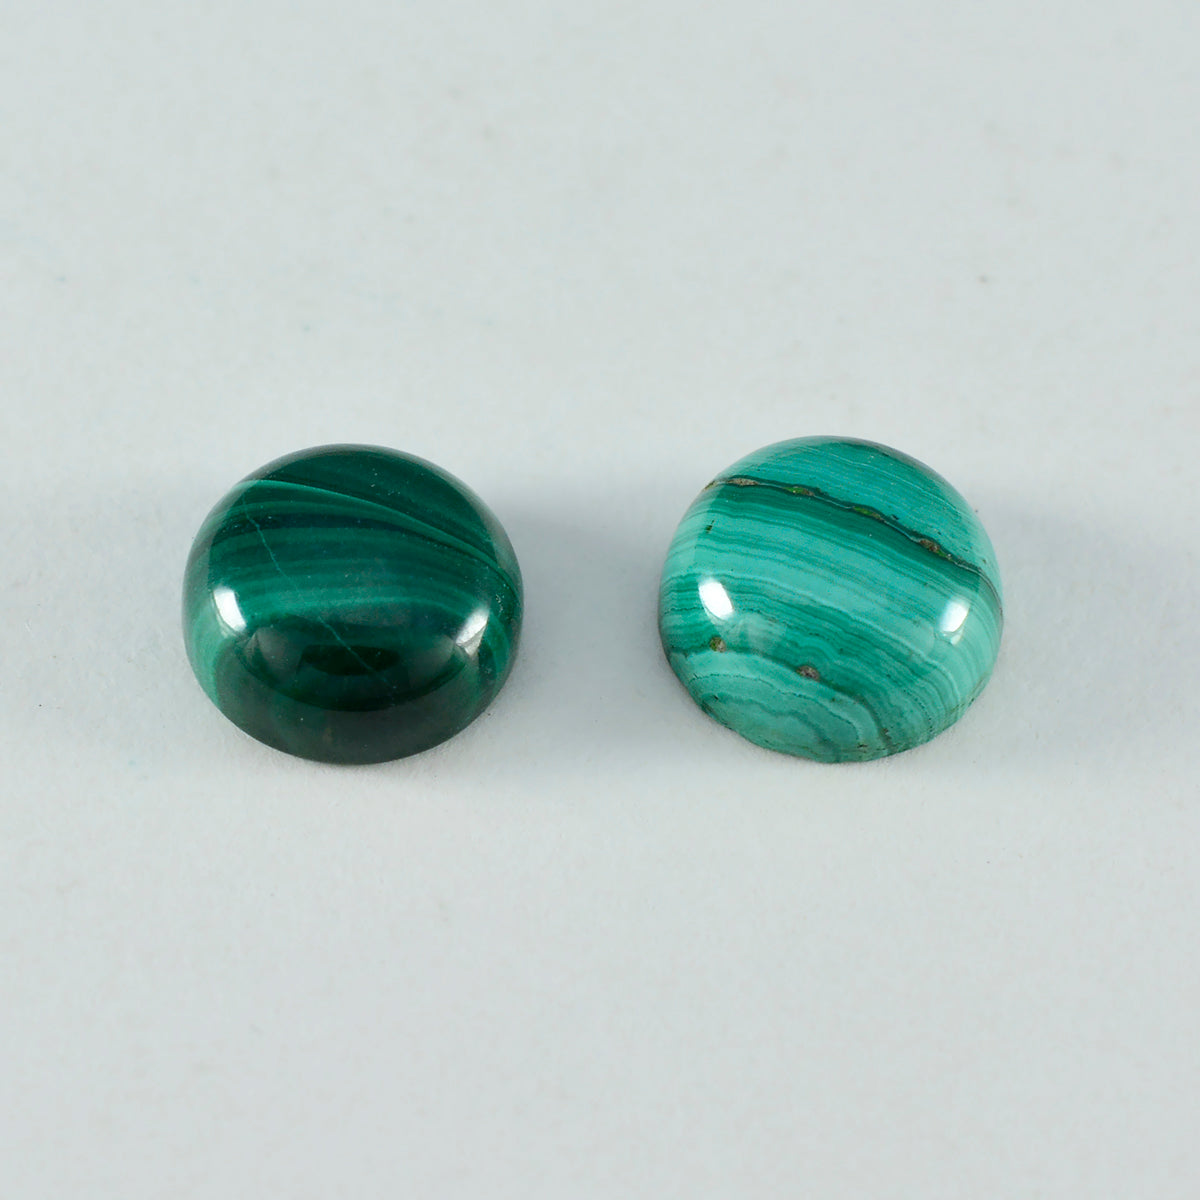 riyogems 1pc グリーン マラカイト カボション 12x12 mm ラウンド形状の素晴らしい品質の石